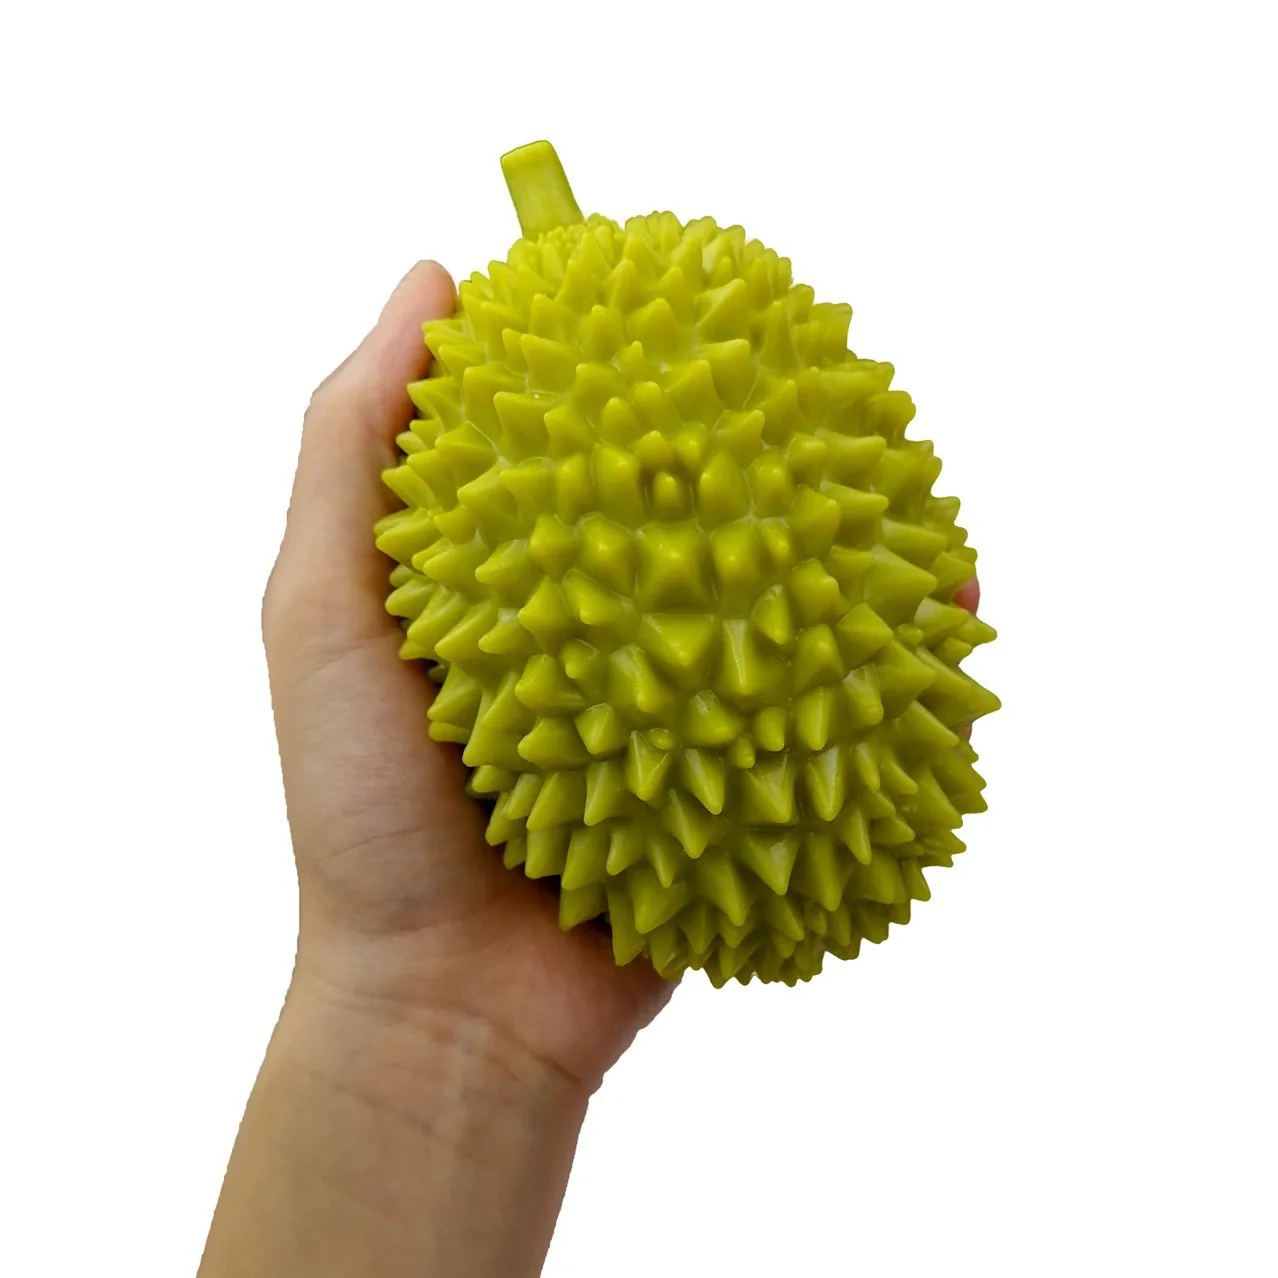 

Jumbo Squishy Kawaii Durian Banana Orange Strawberry Fruit Squishies Slow Rising Stress Relief Squeeze Toys for Kids